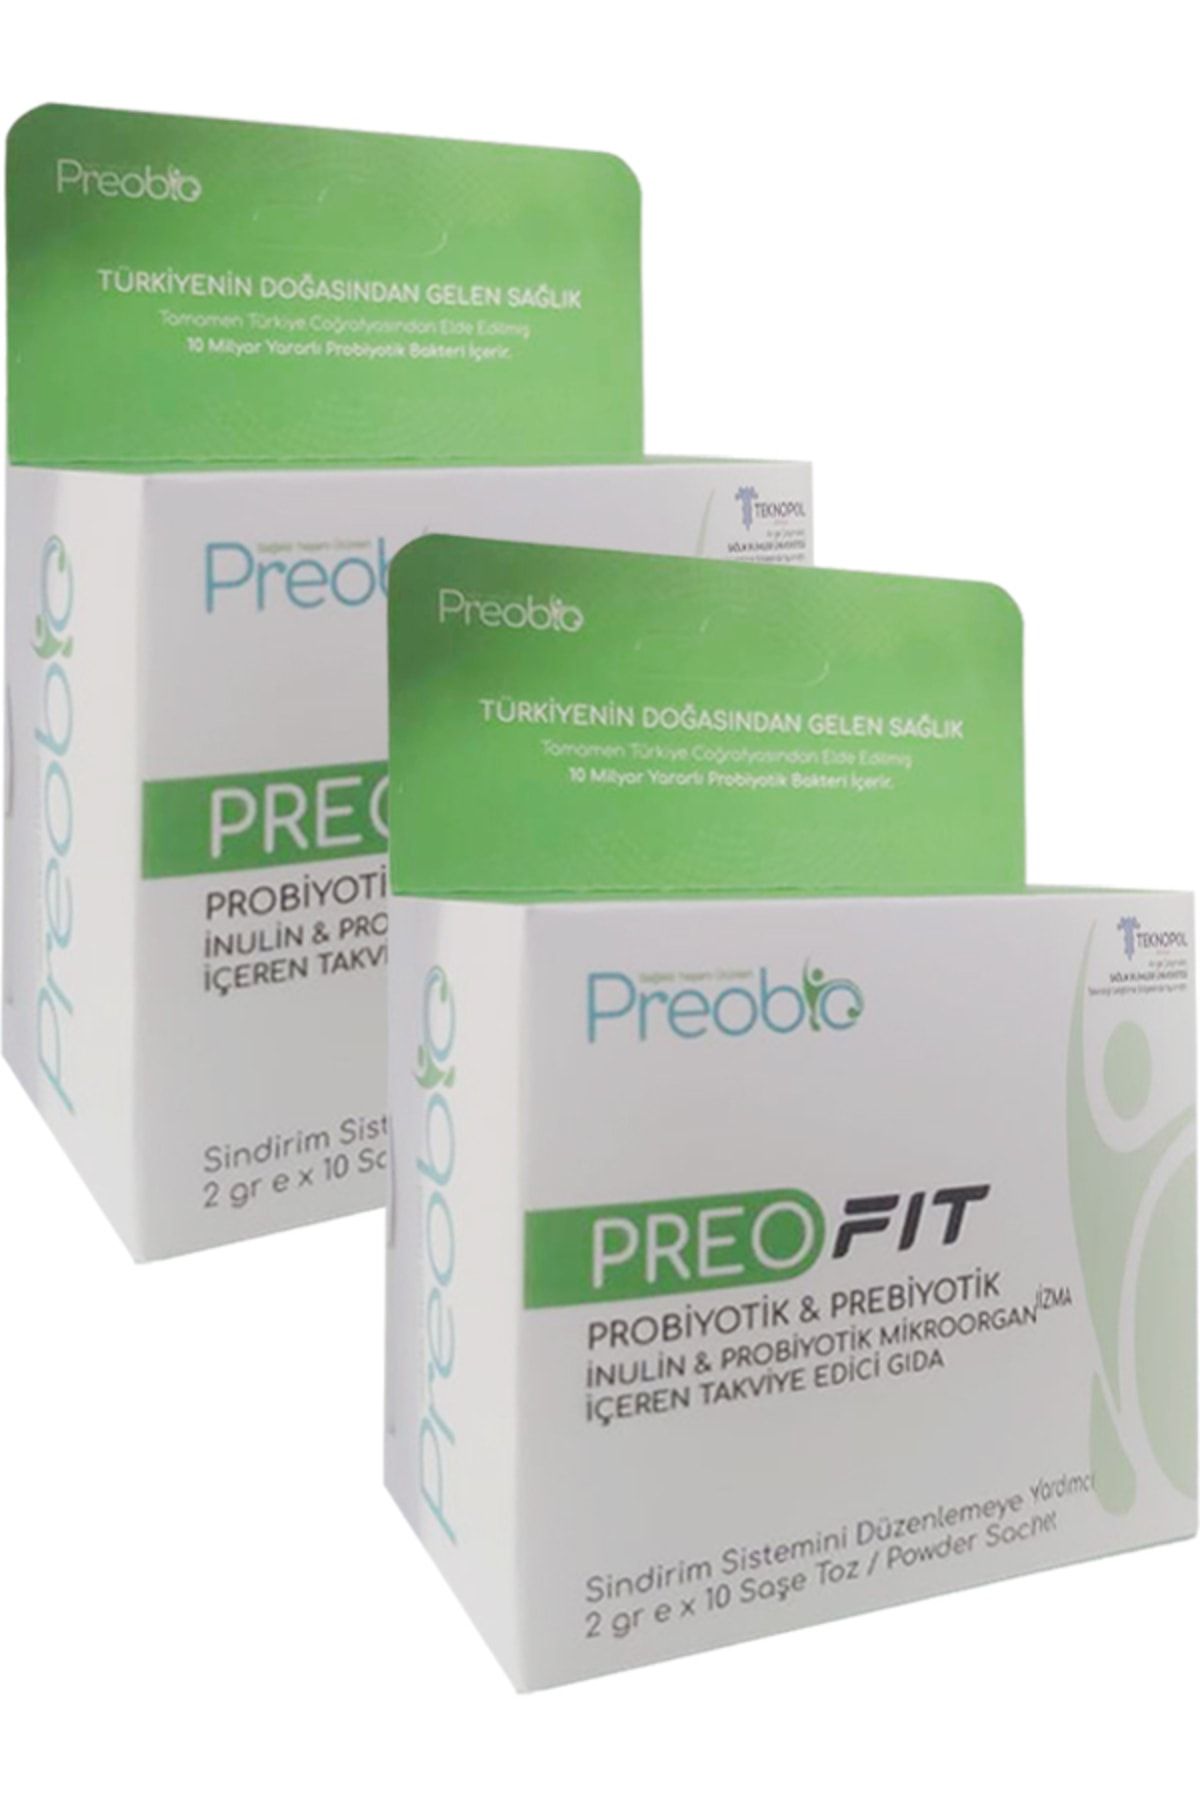 Preobio Preofit Probiyotik Prebiotik Yoğurt Mayası 2 Kutu 40 Saşe